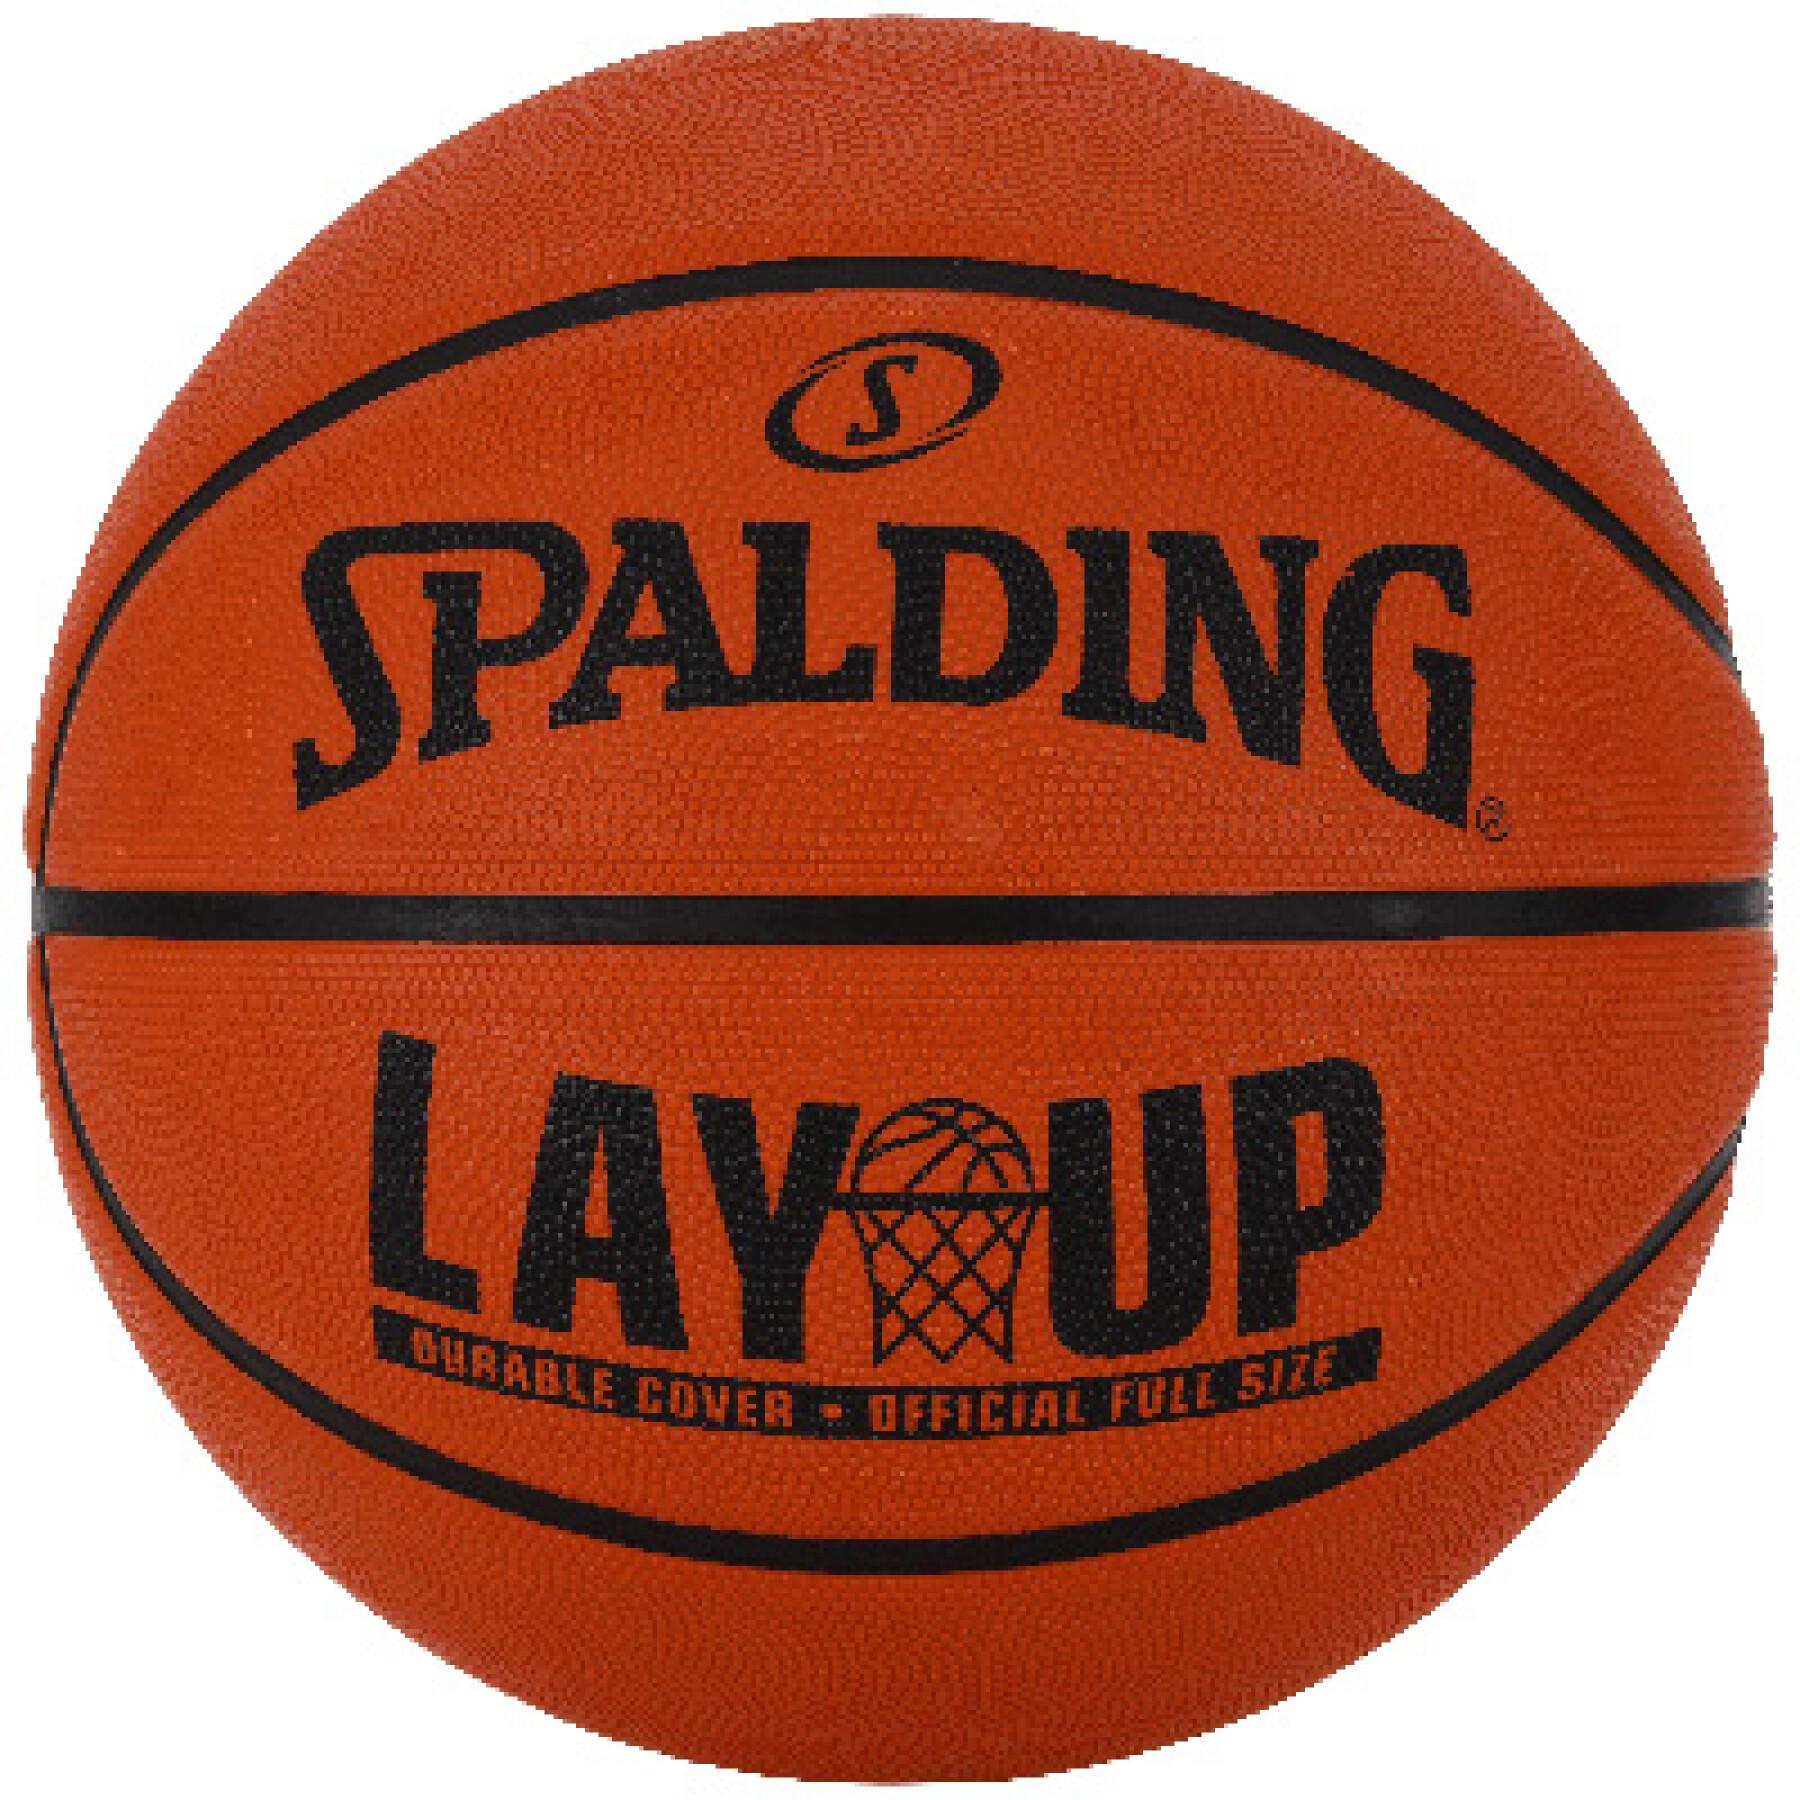 Basketboll Spalding Layup